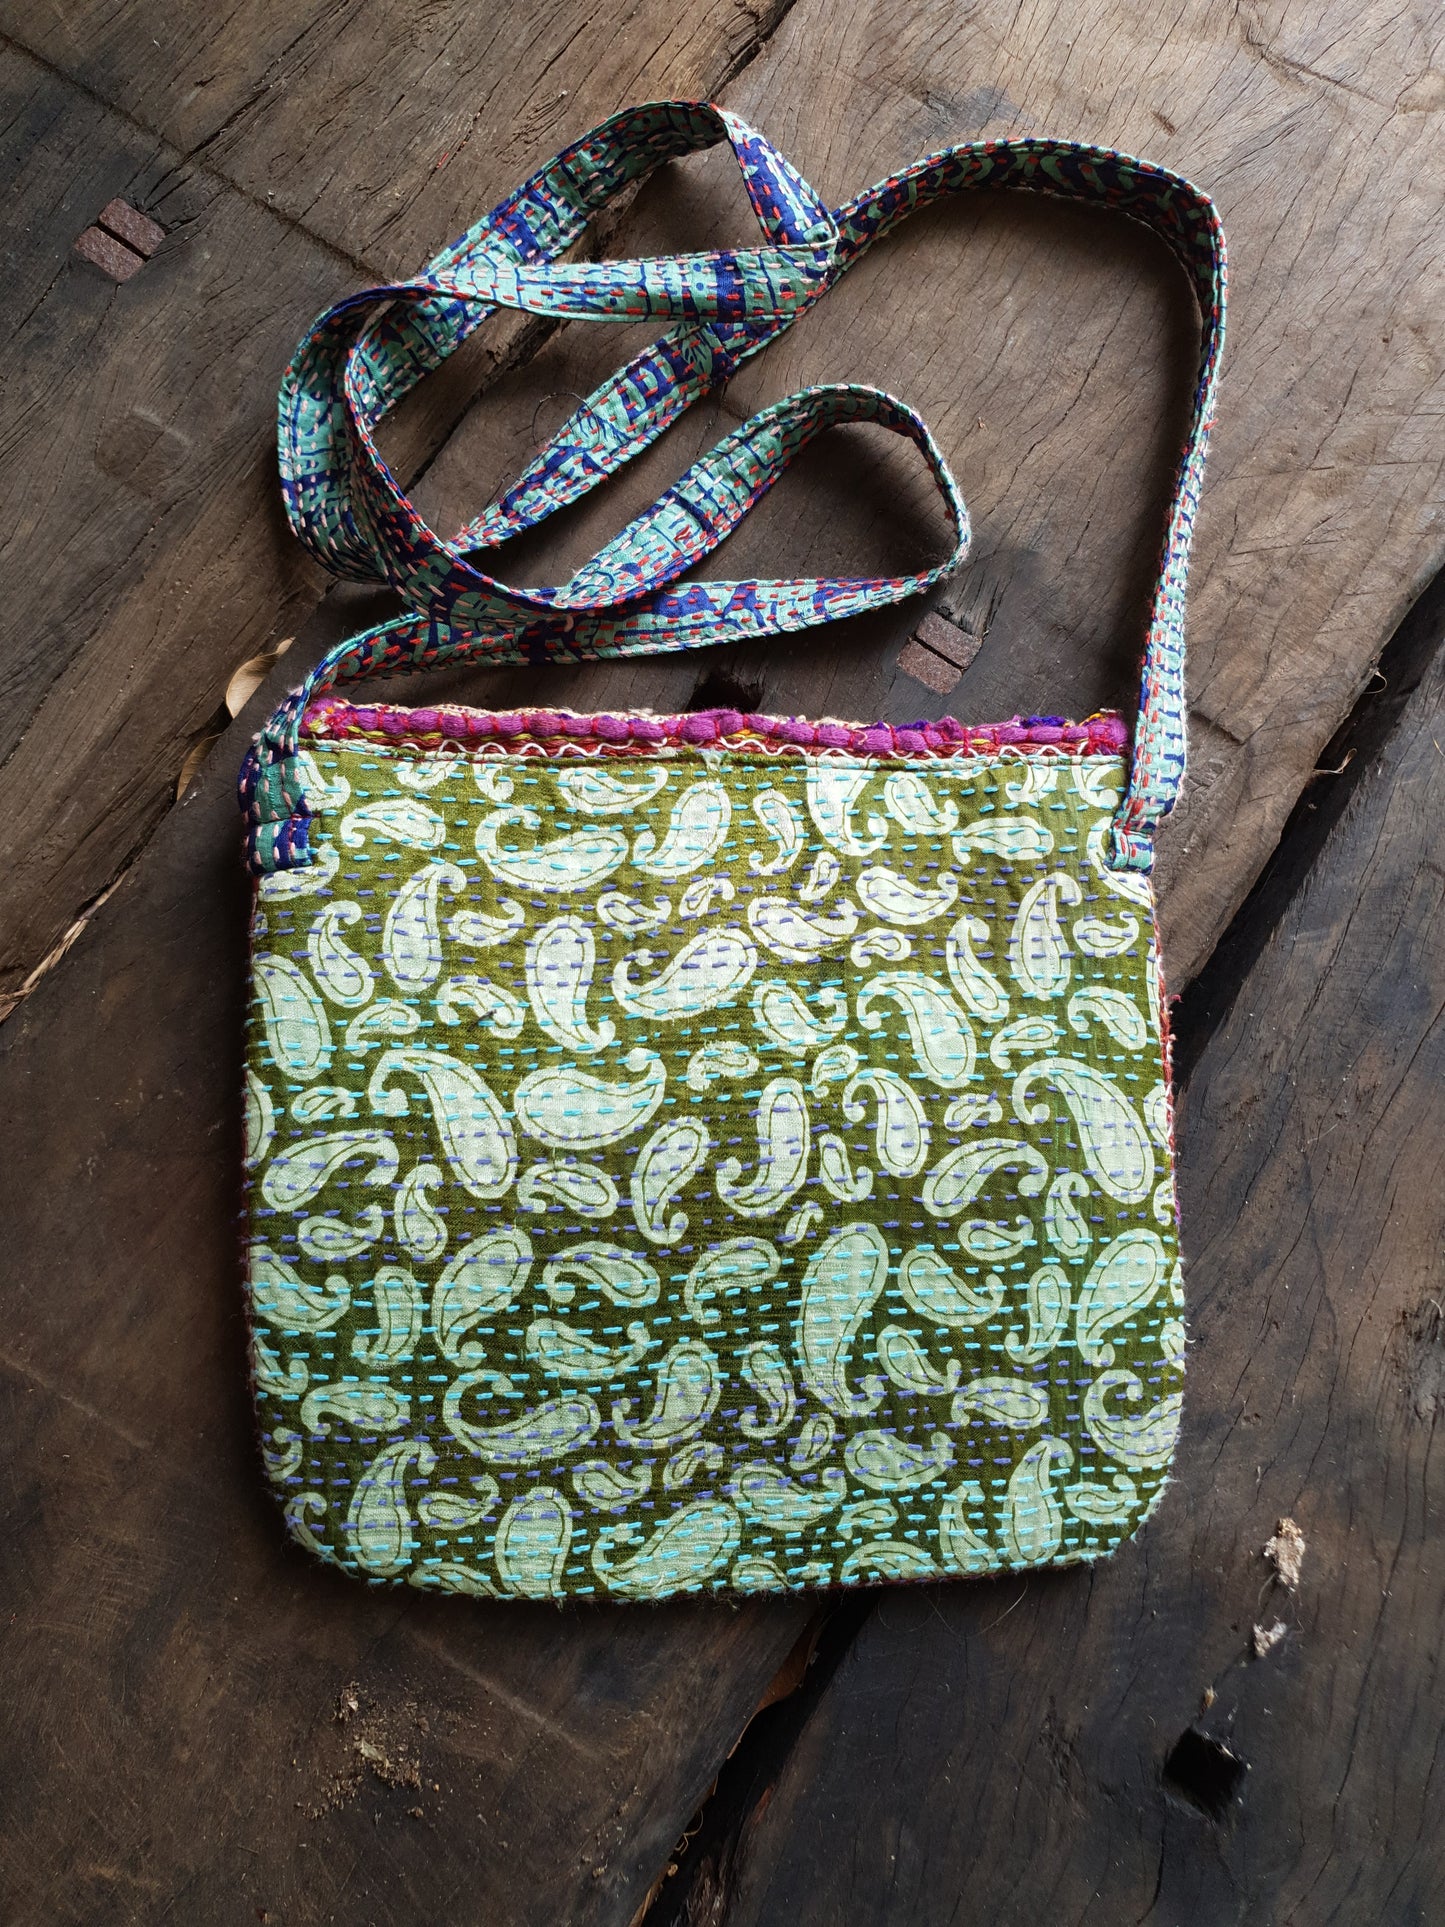 Banjara bag with embroidery